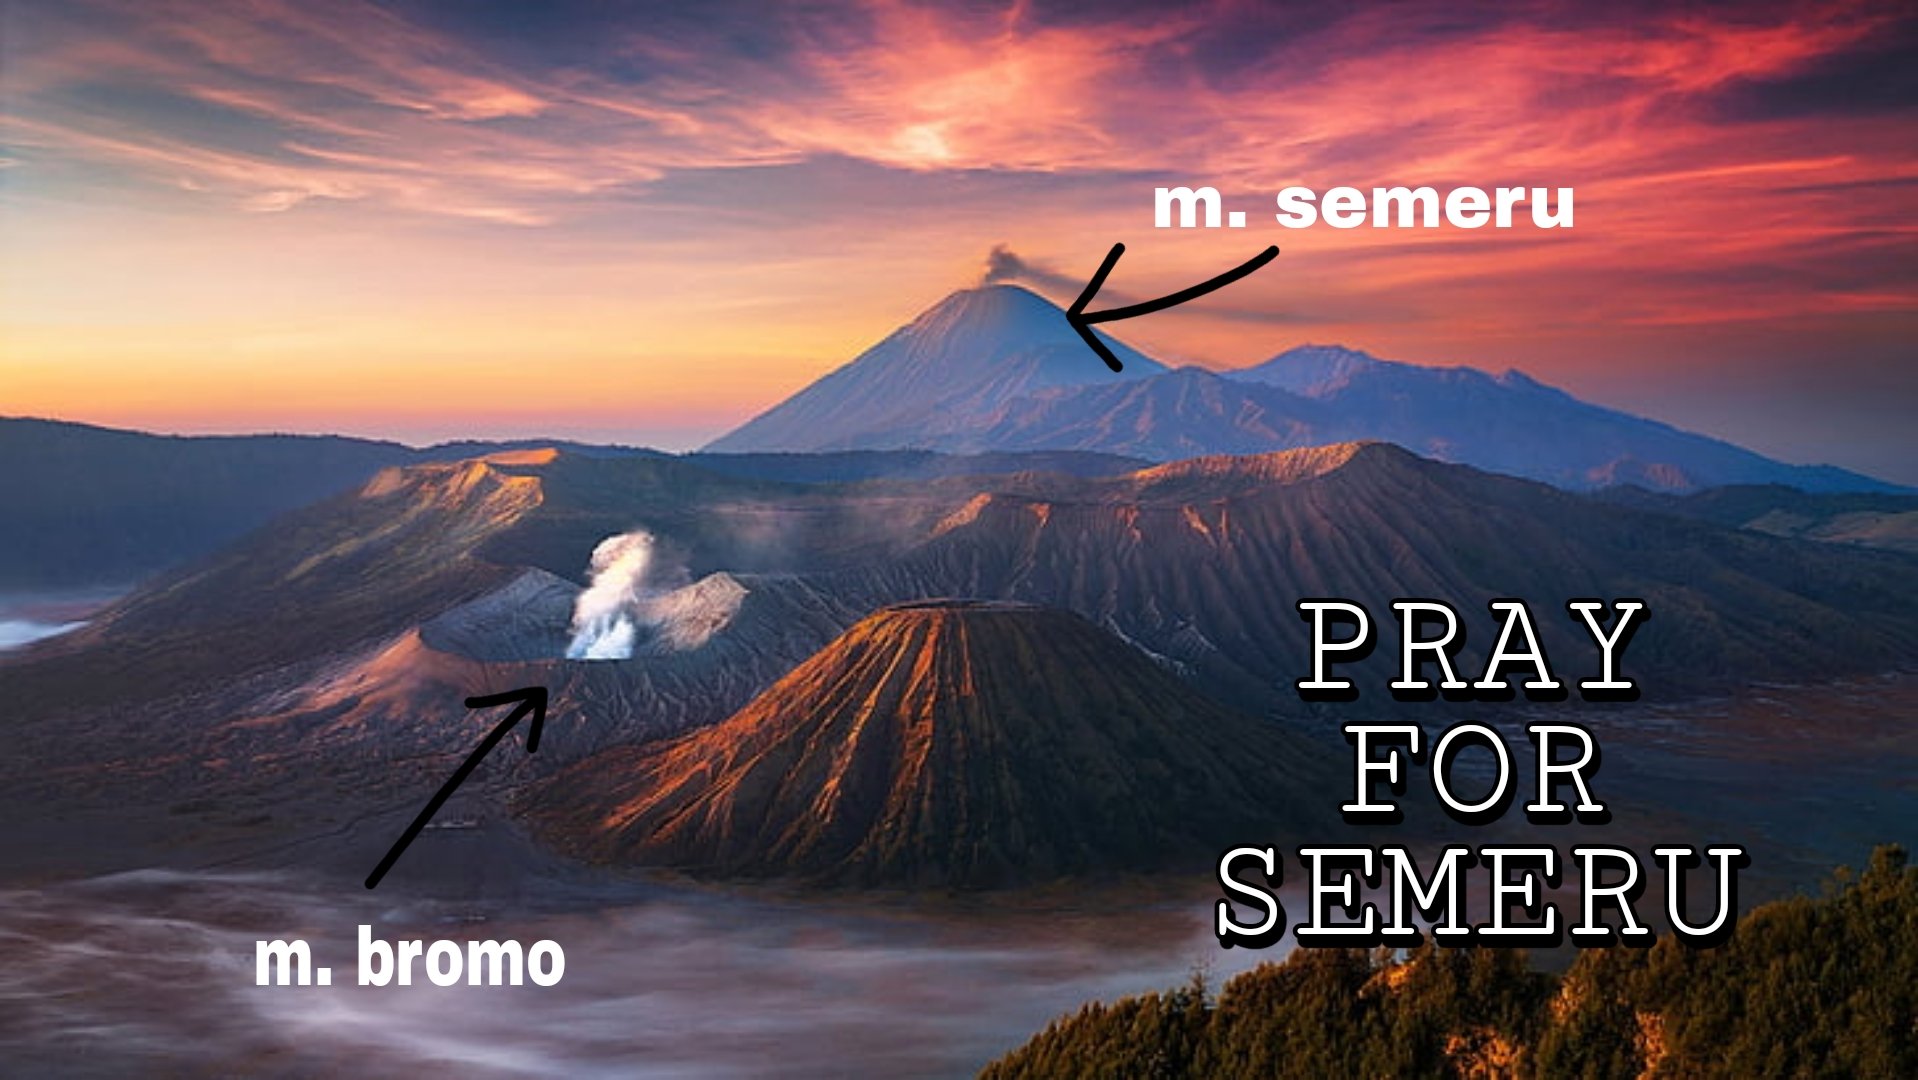 Pray for semeru